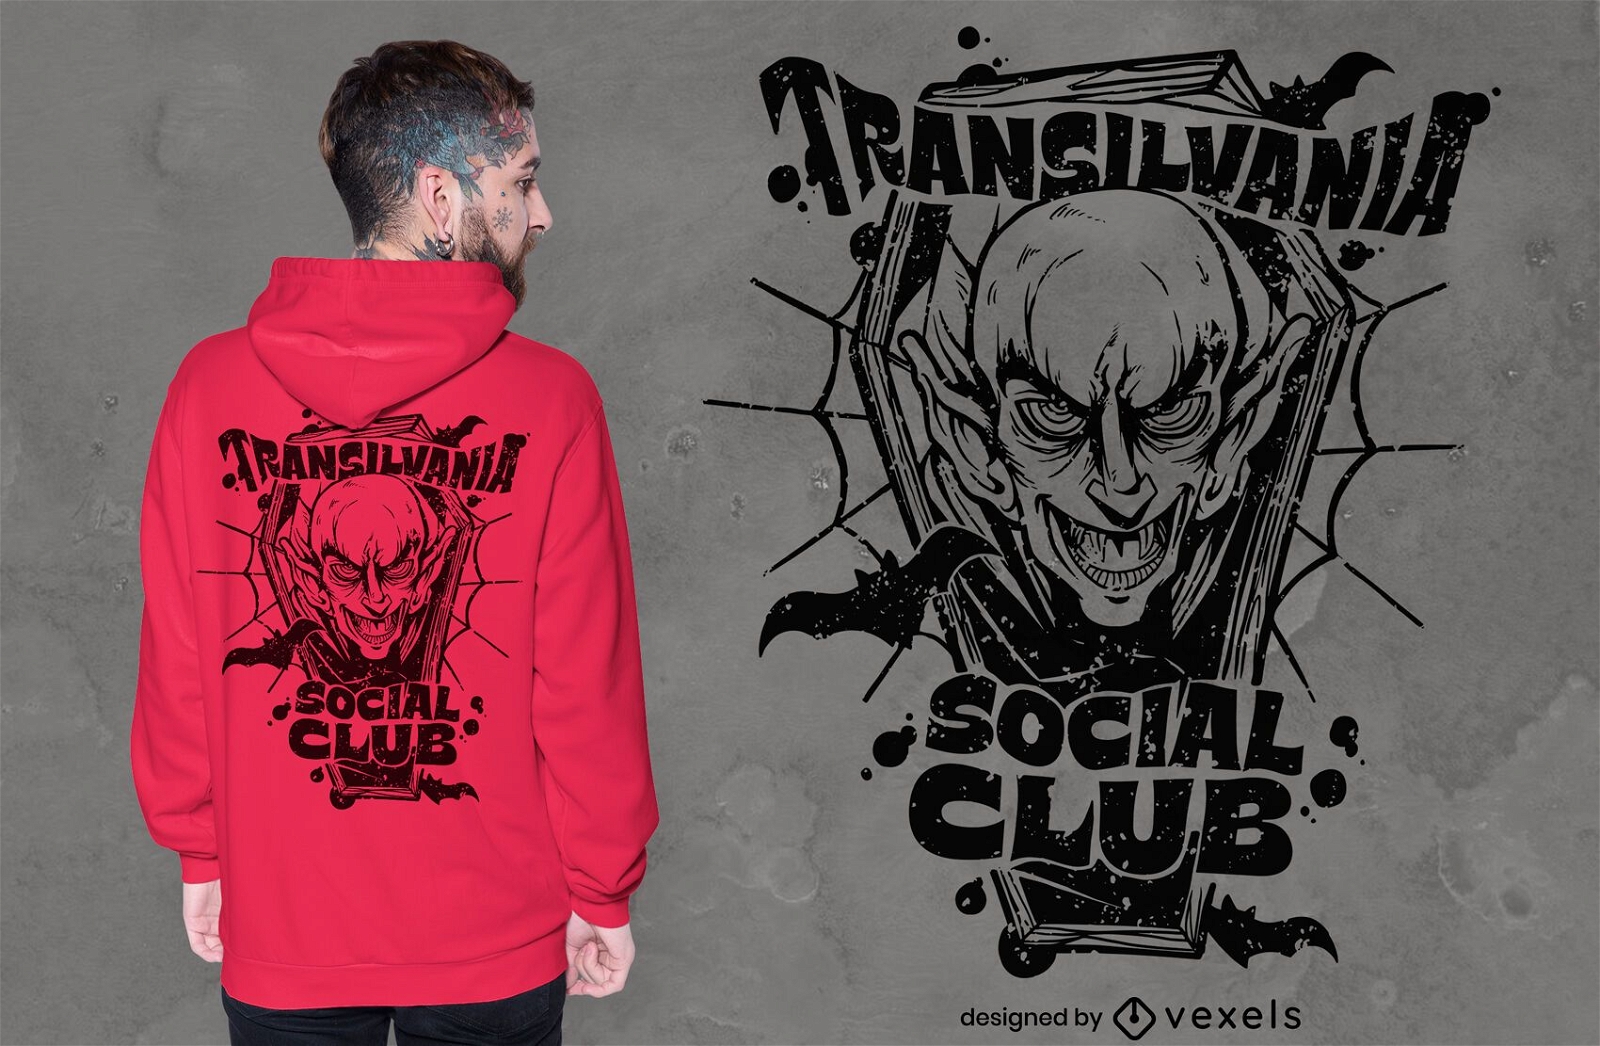 Transilvania social club t-shirt design